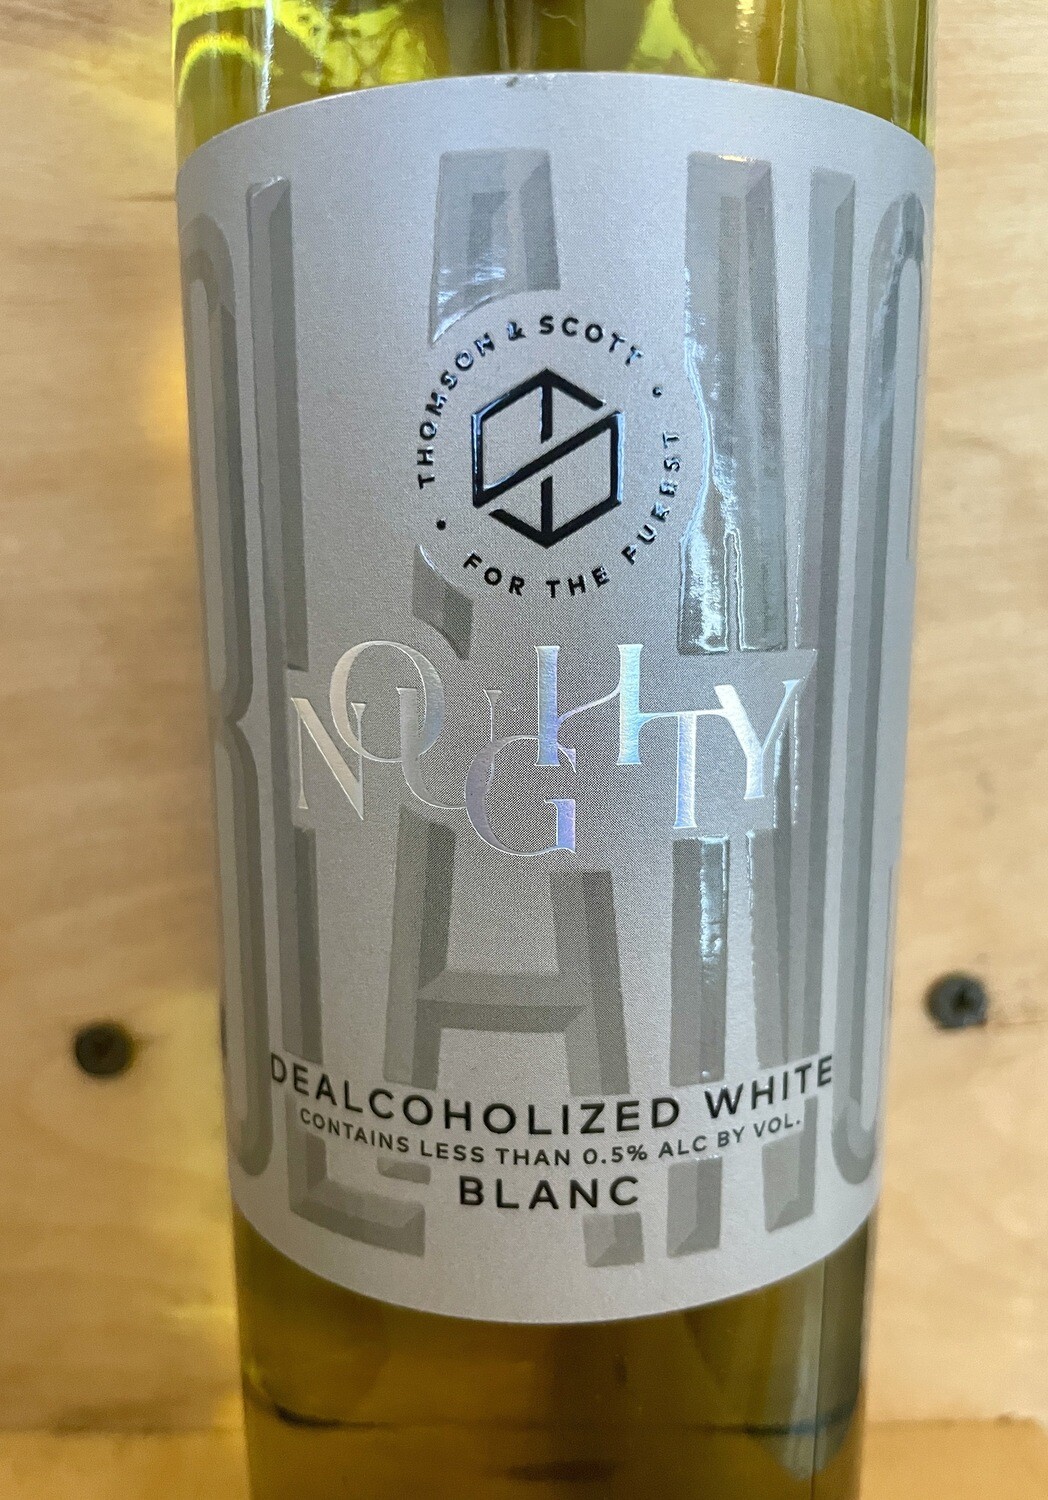 Thompson and Scott Noughty Dealcoholized Chenin Blanc